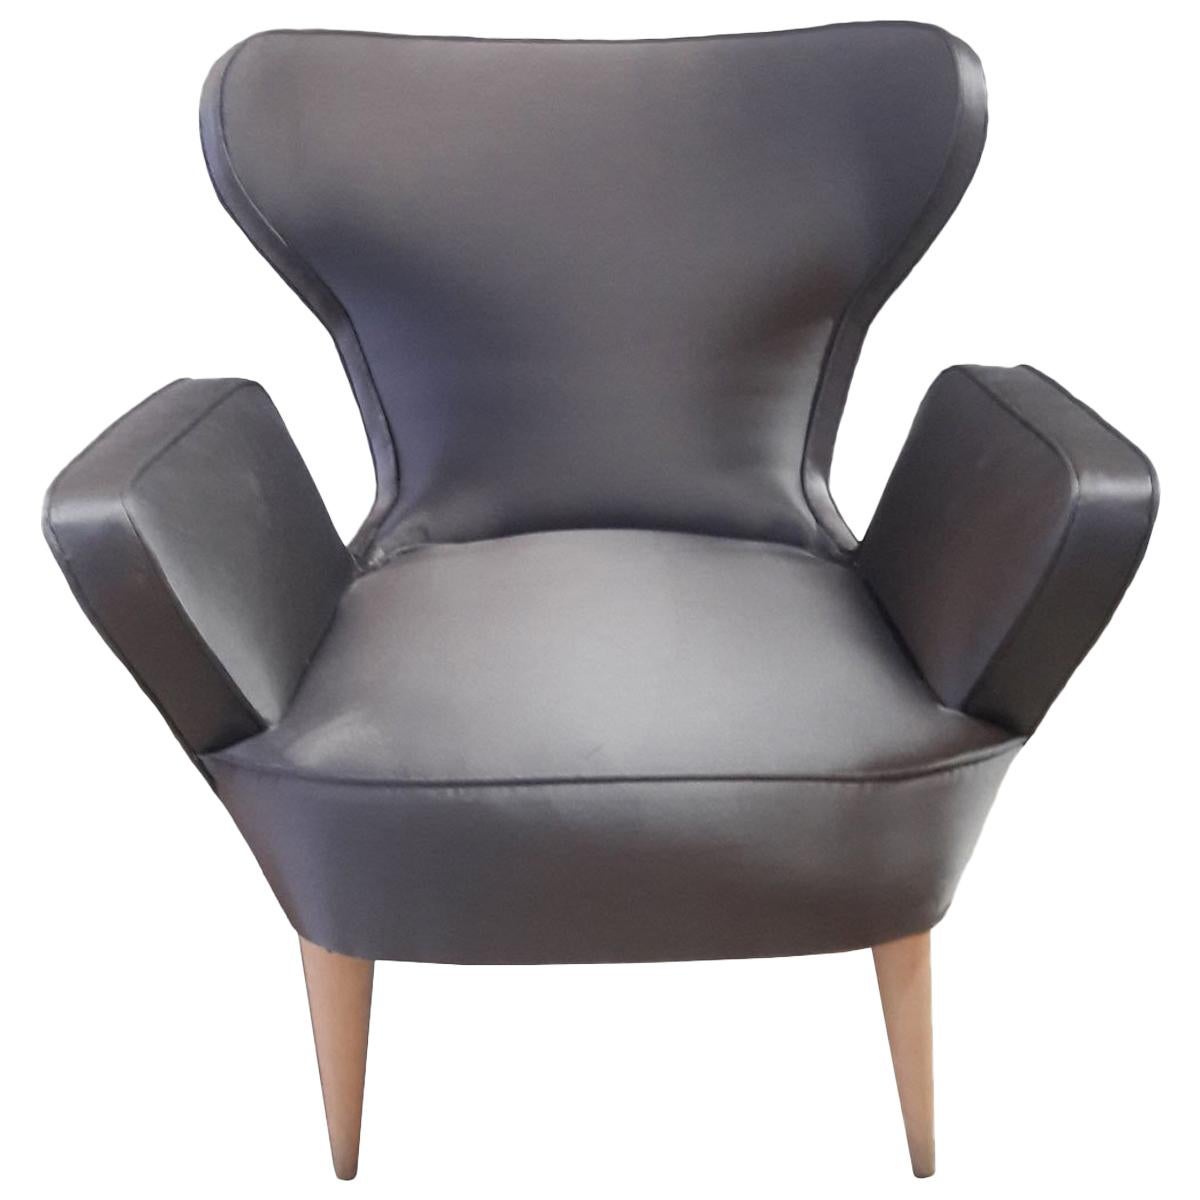 Mid-20th Century Tulip-Style Chair in Grey Silk